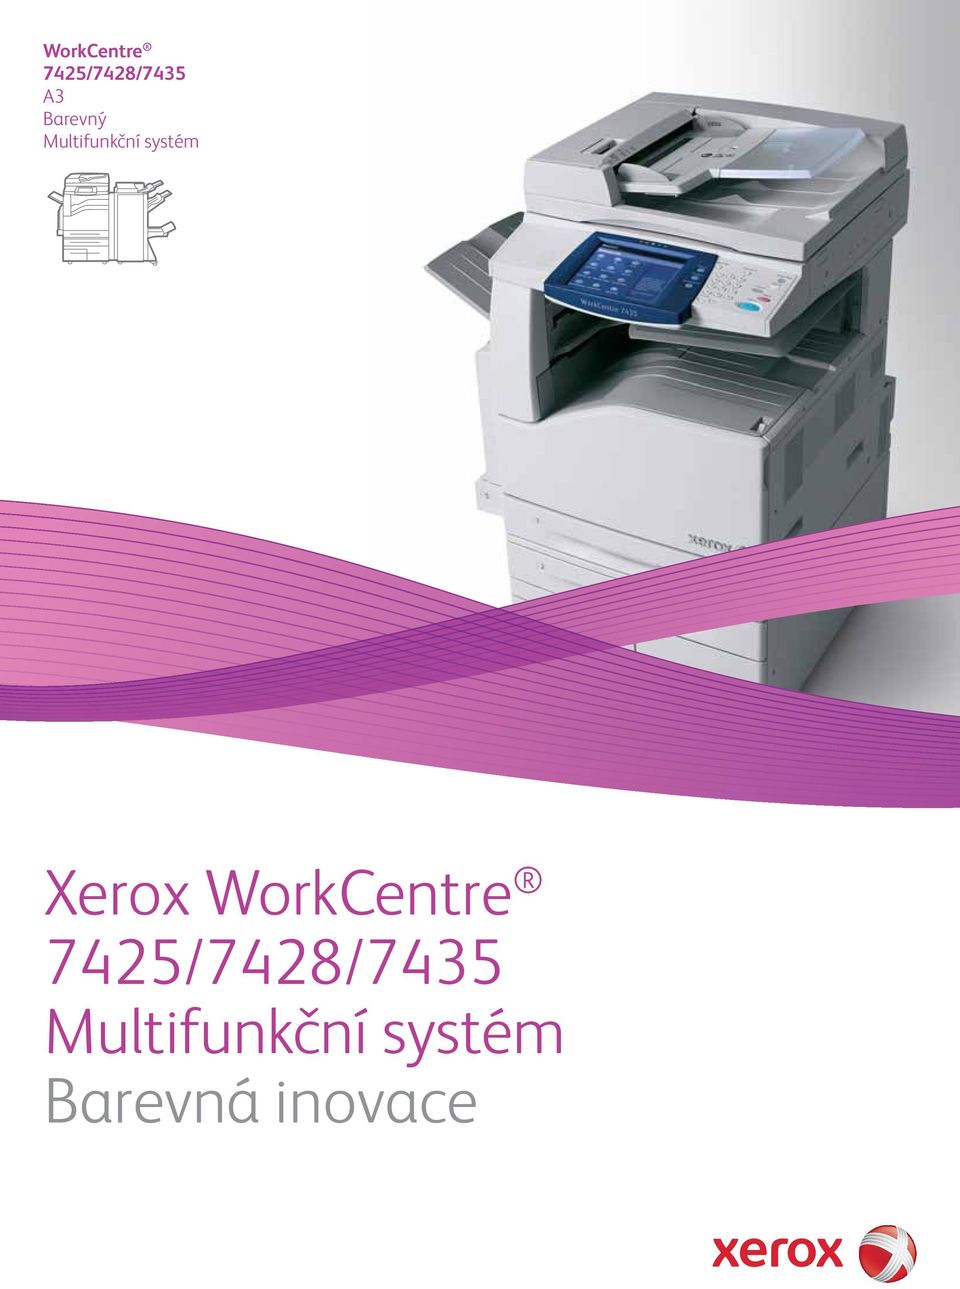 Xerox WorkCentre